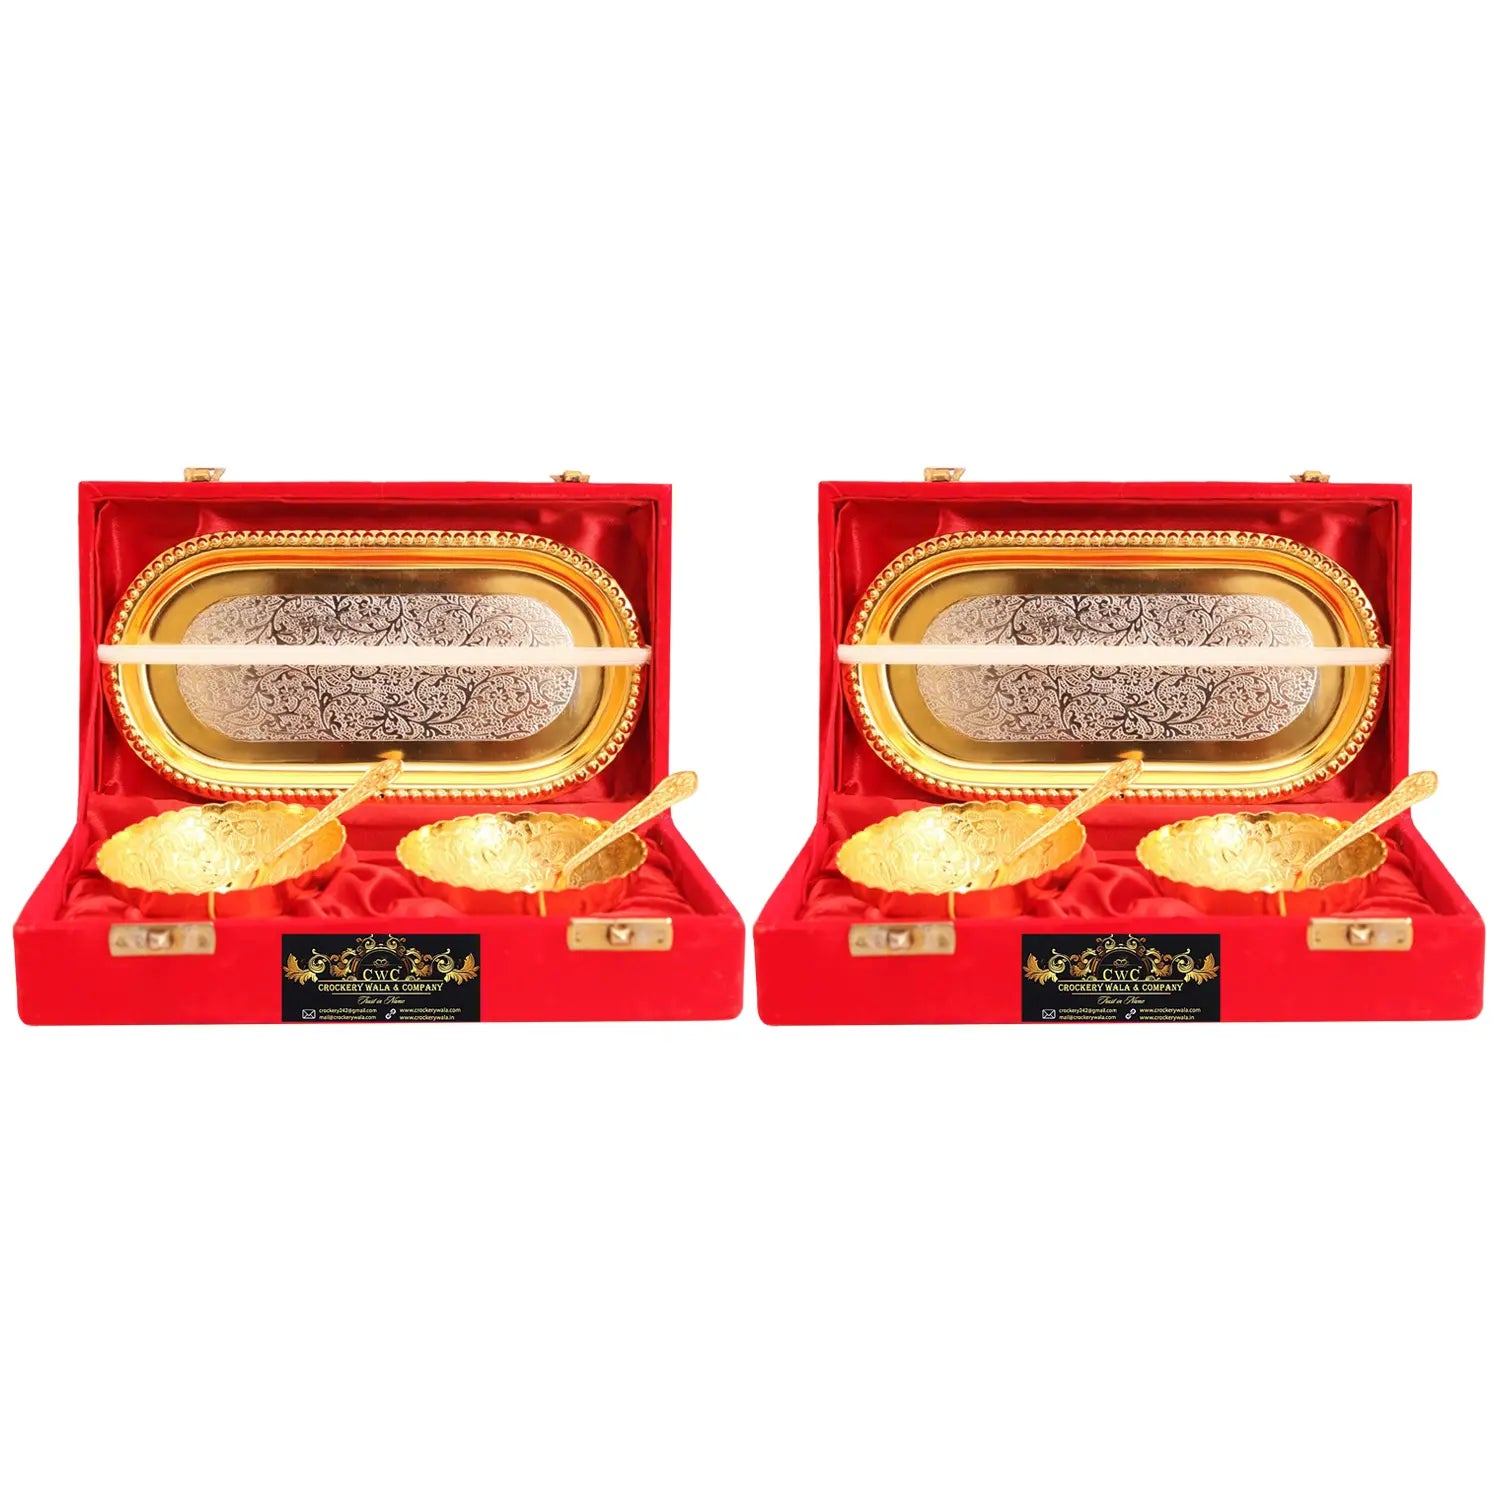 Crockery Wala & Company Silver Plated Gold Polished Bowl Set with 4 Spoons & 2 Tray, Set of 2, Diwali Gift Item - CROCKERY WALA AND COMPANY 